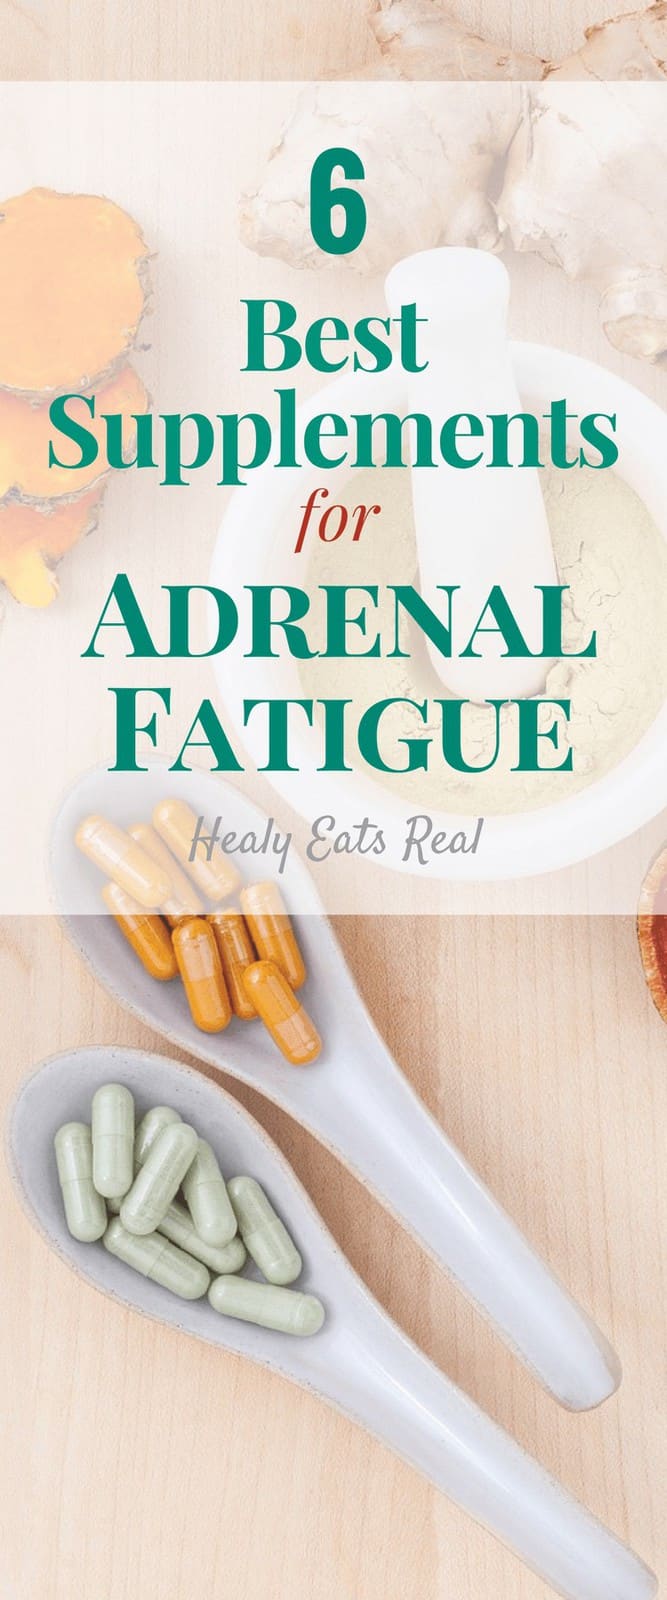 6 Best Supplements for Adrenal Fatigue